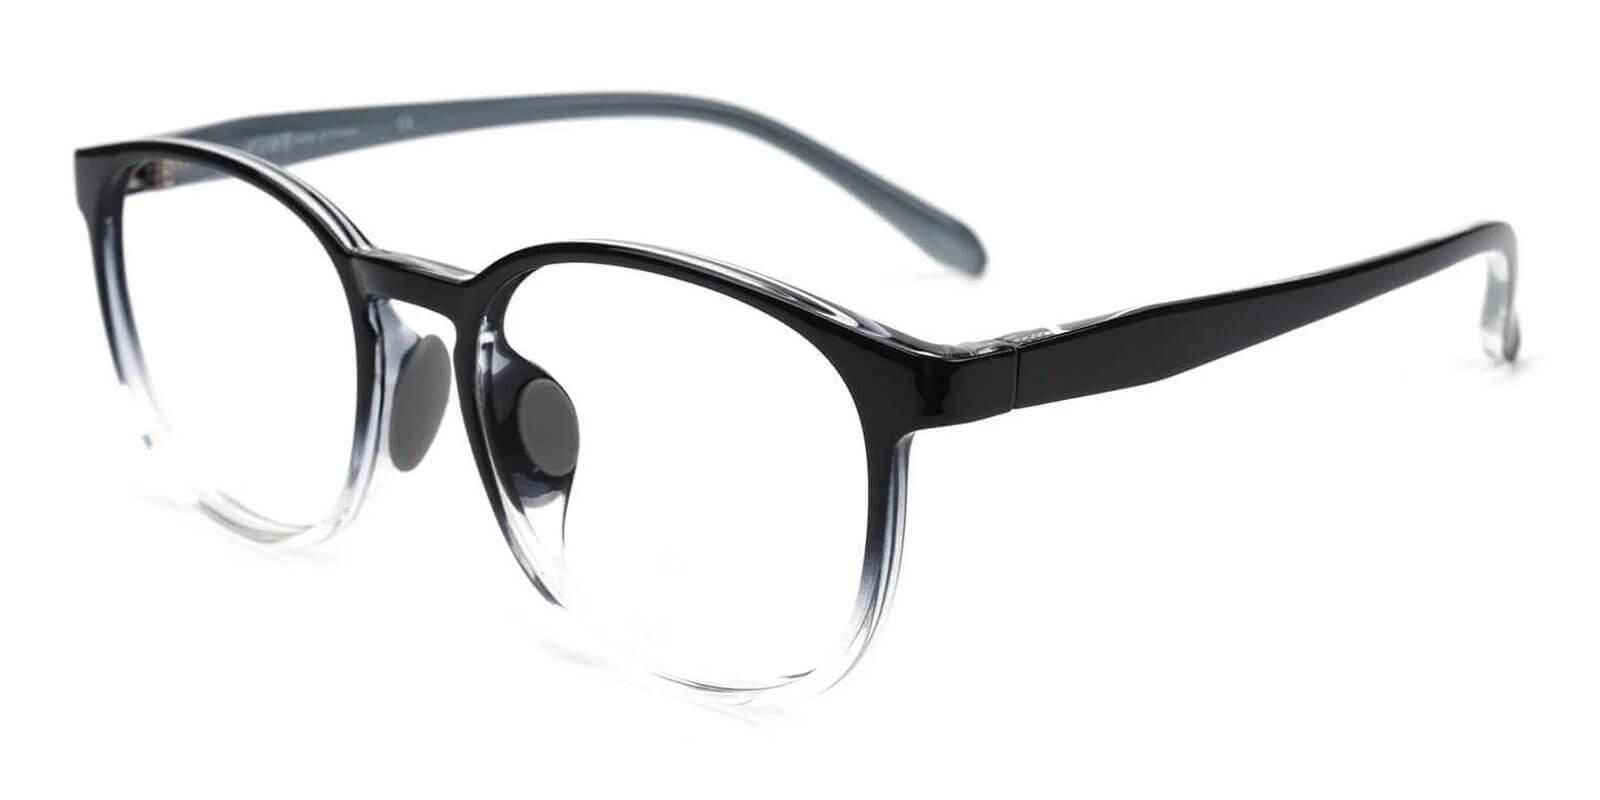 Alchemist Multicolor TR Eyeglasses , UniversalBridgeFit , Lightweight Frames from ABBE Glasses